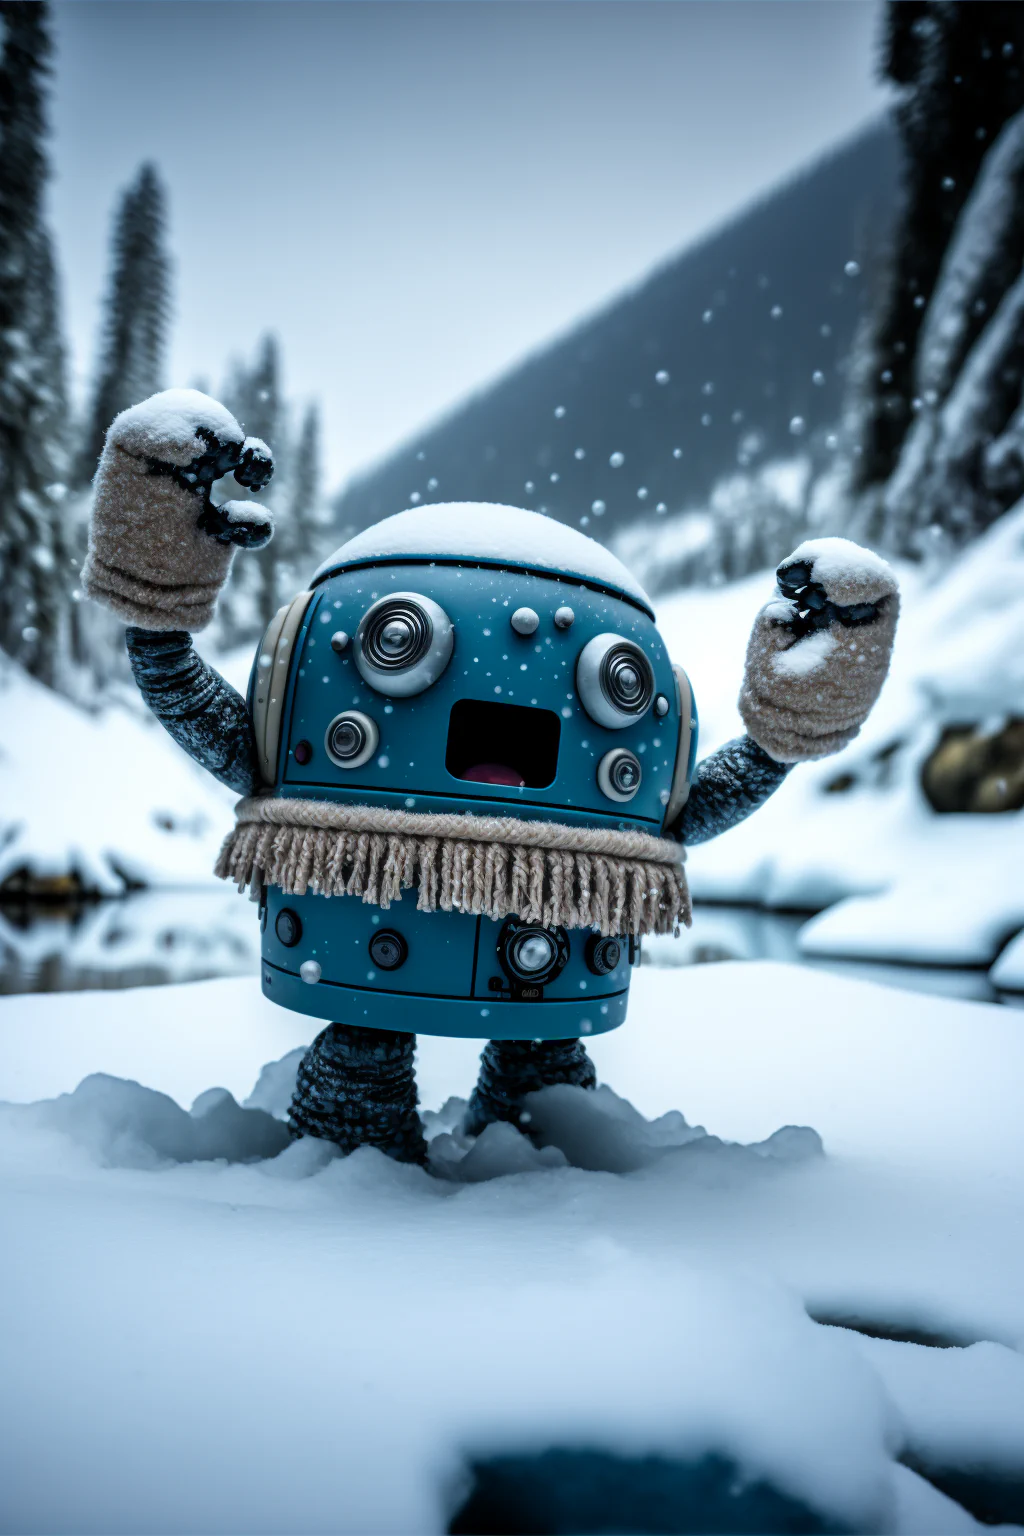 Christoph_C._Cemper_Cute_robot_dancing_snow_robotic_body_round__c3a6a687-4002-4255-8d43-3afda4538365